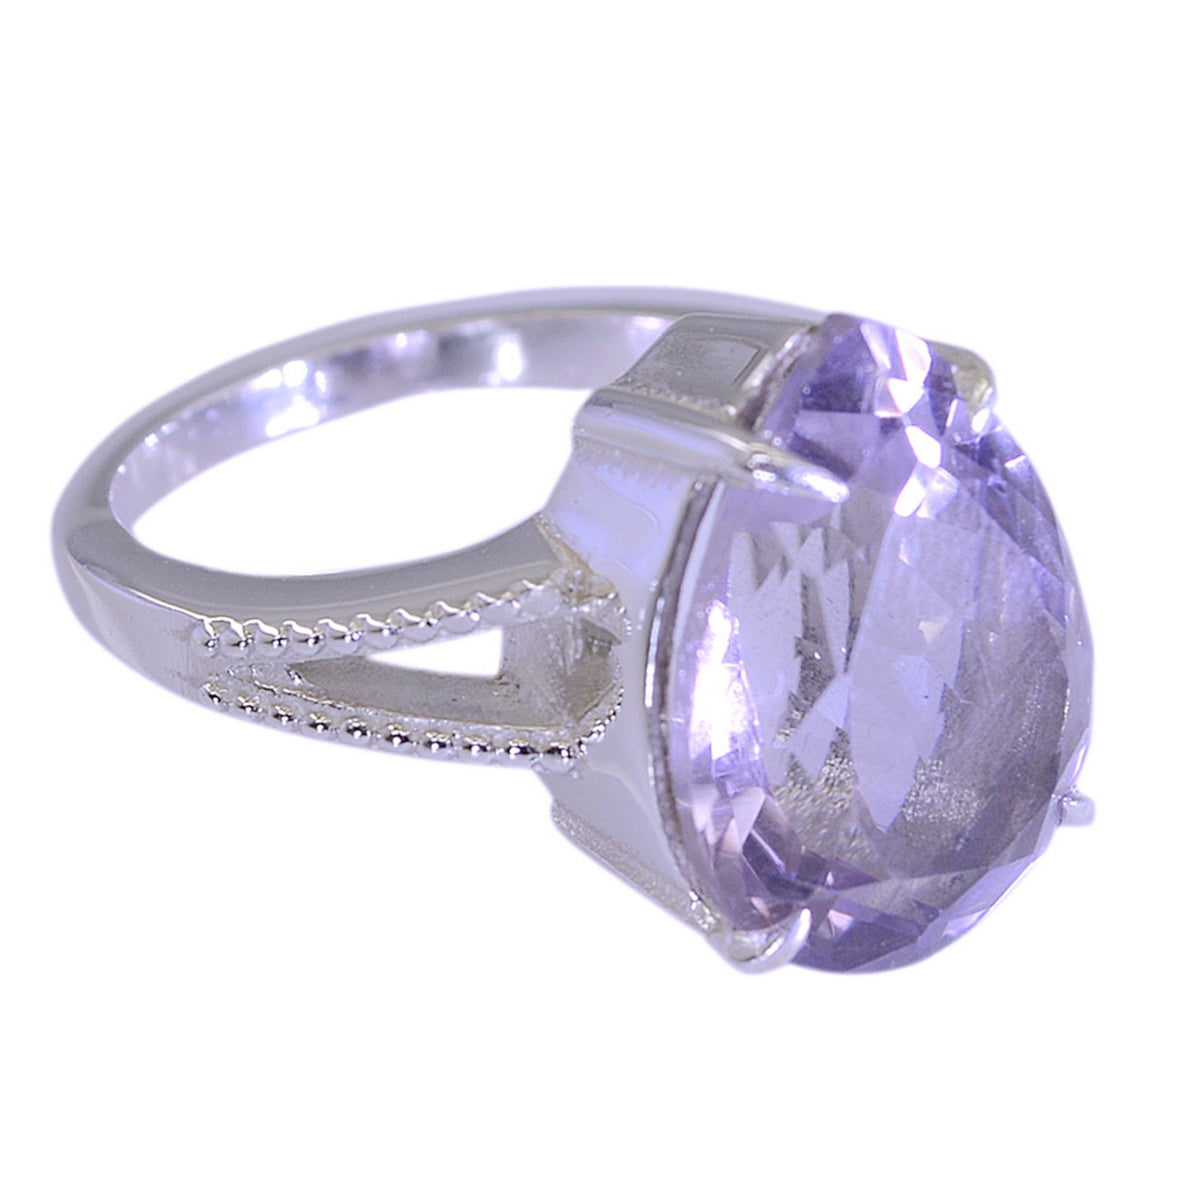 Ravishing Gems Amethyst 925 Sterling Silver Ring Gift For Mother